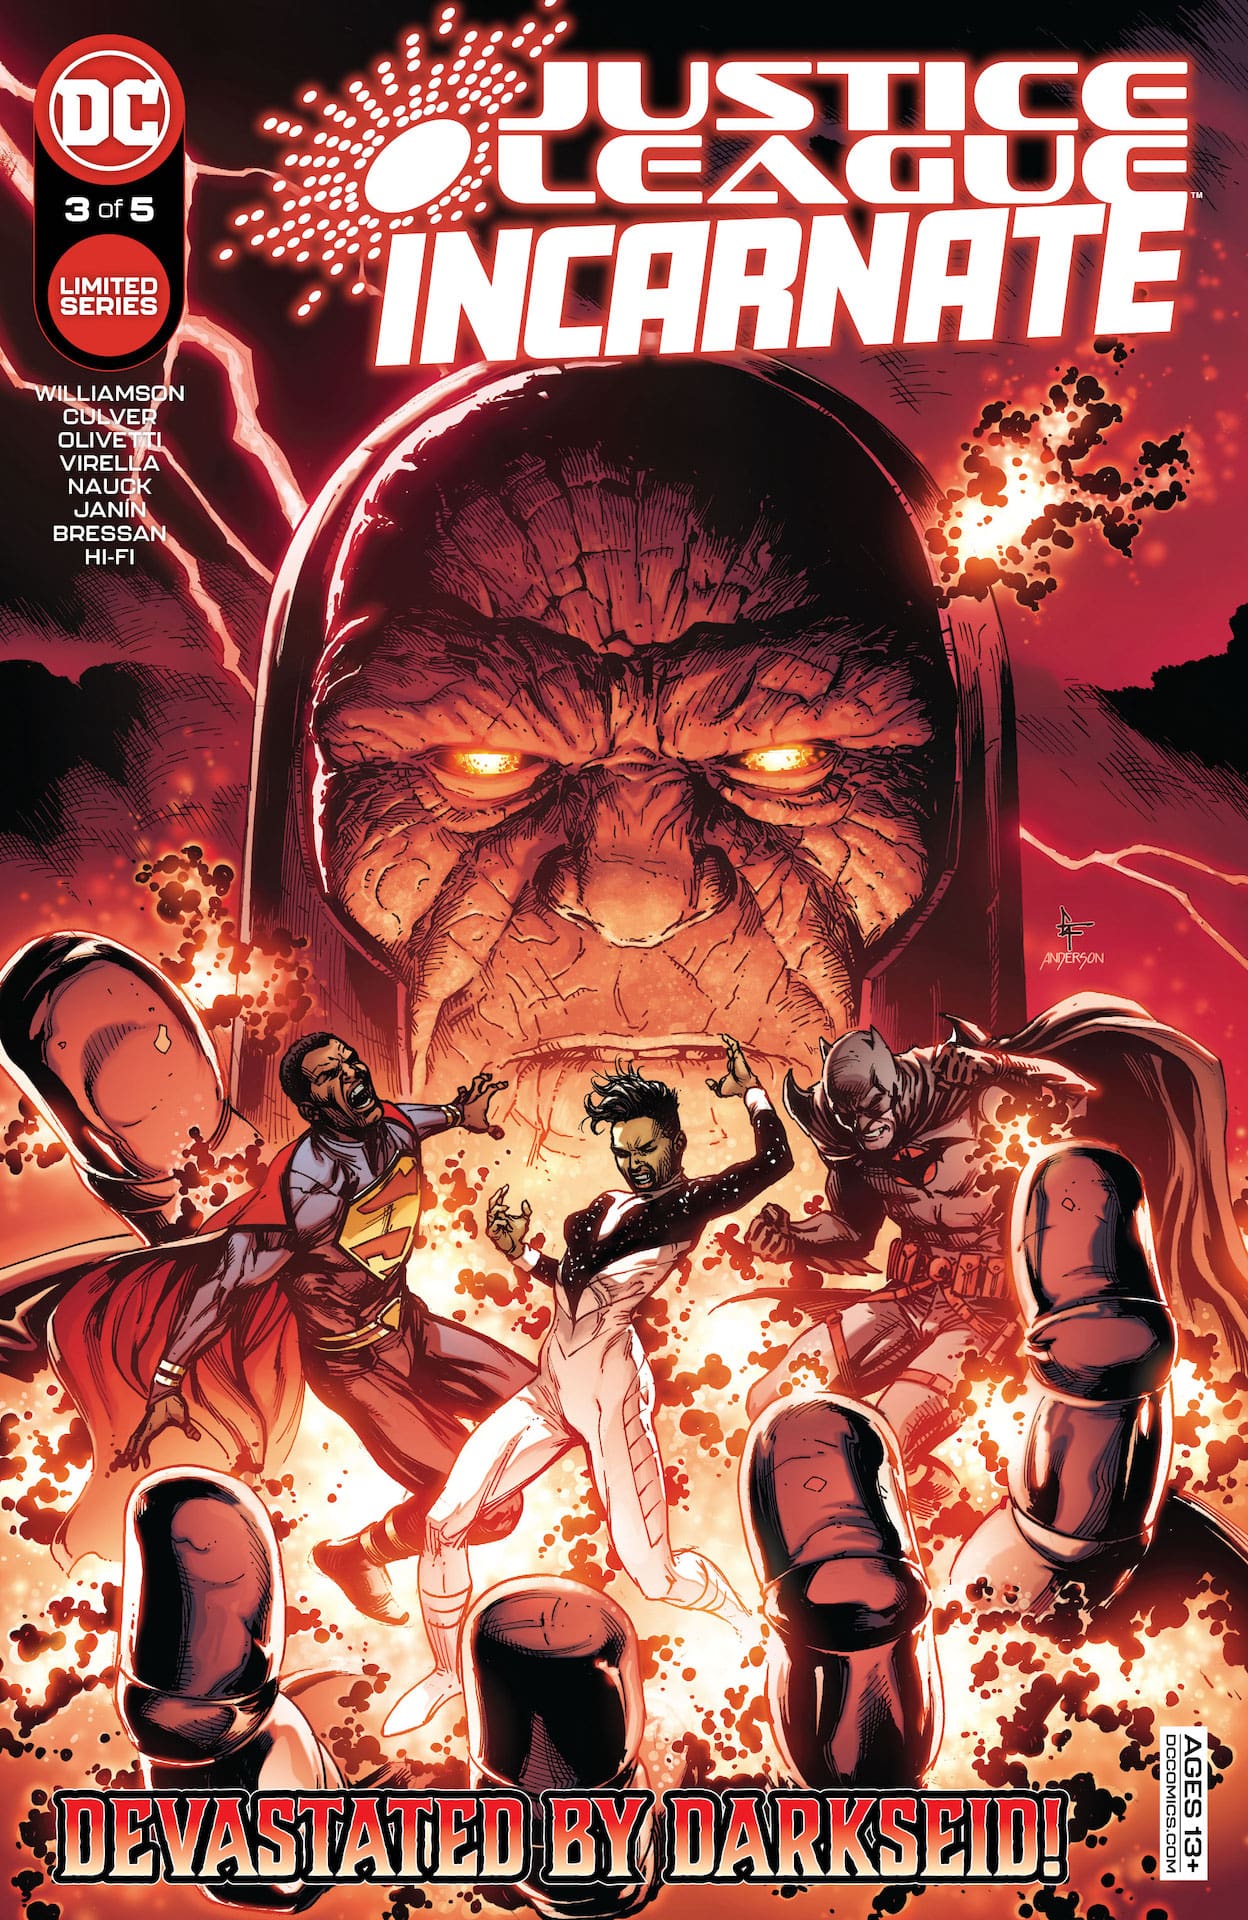 DC Preview: Justice League Incarnate #3